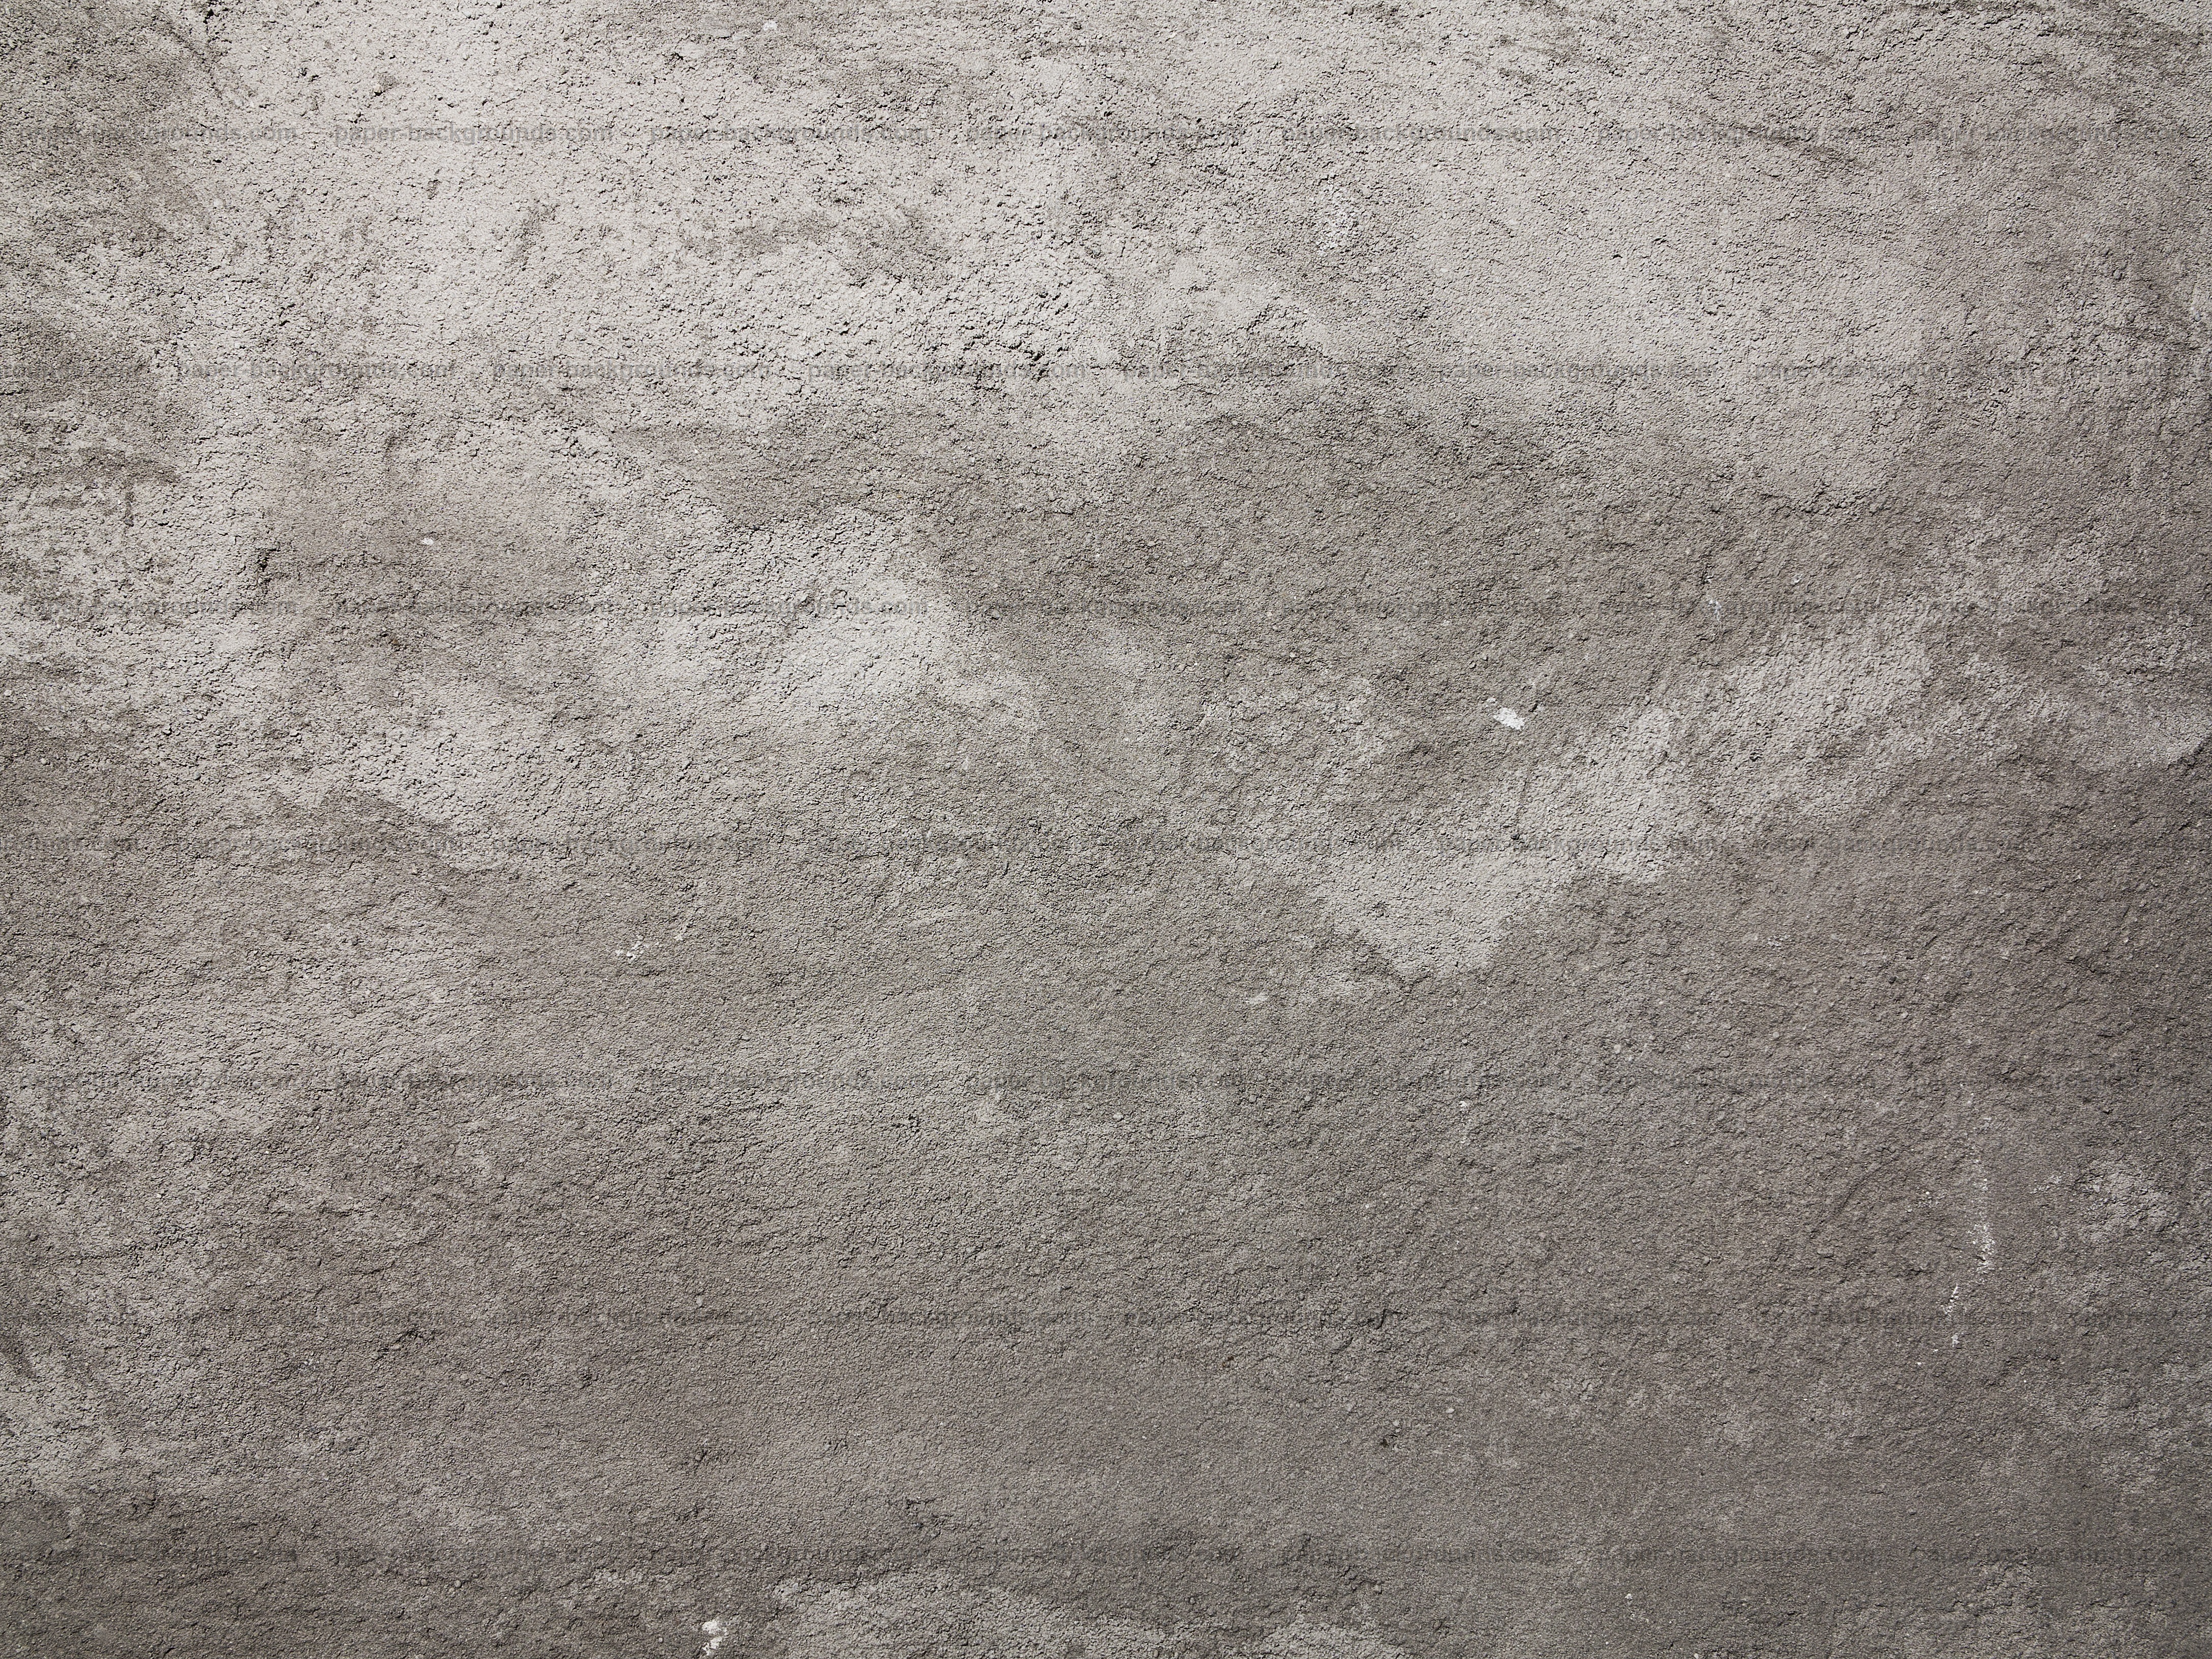 Vintage Concrete Wall Background Texture Paper Background